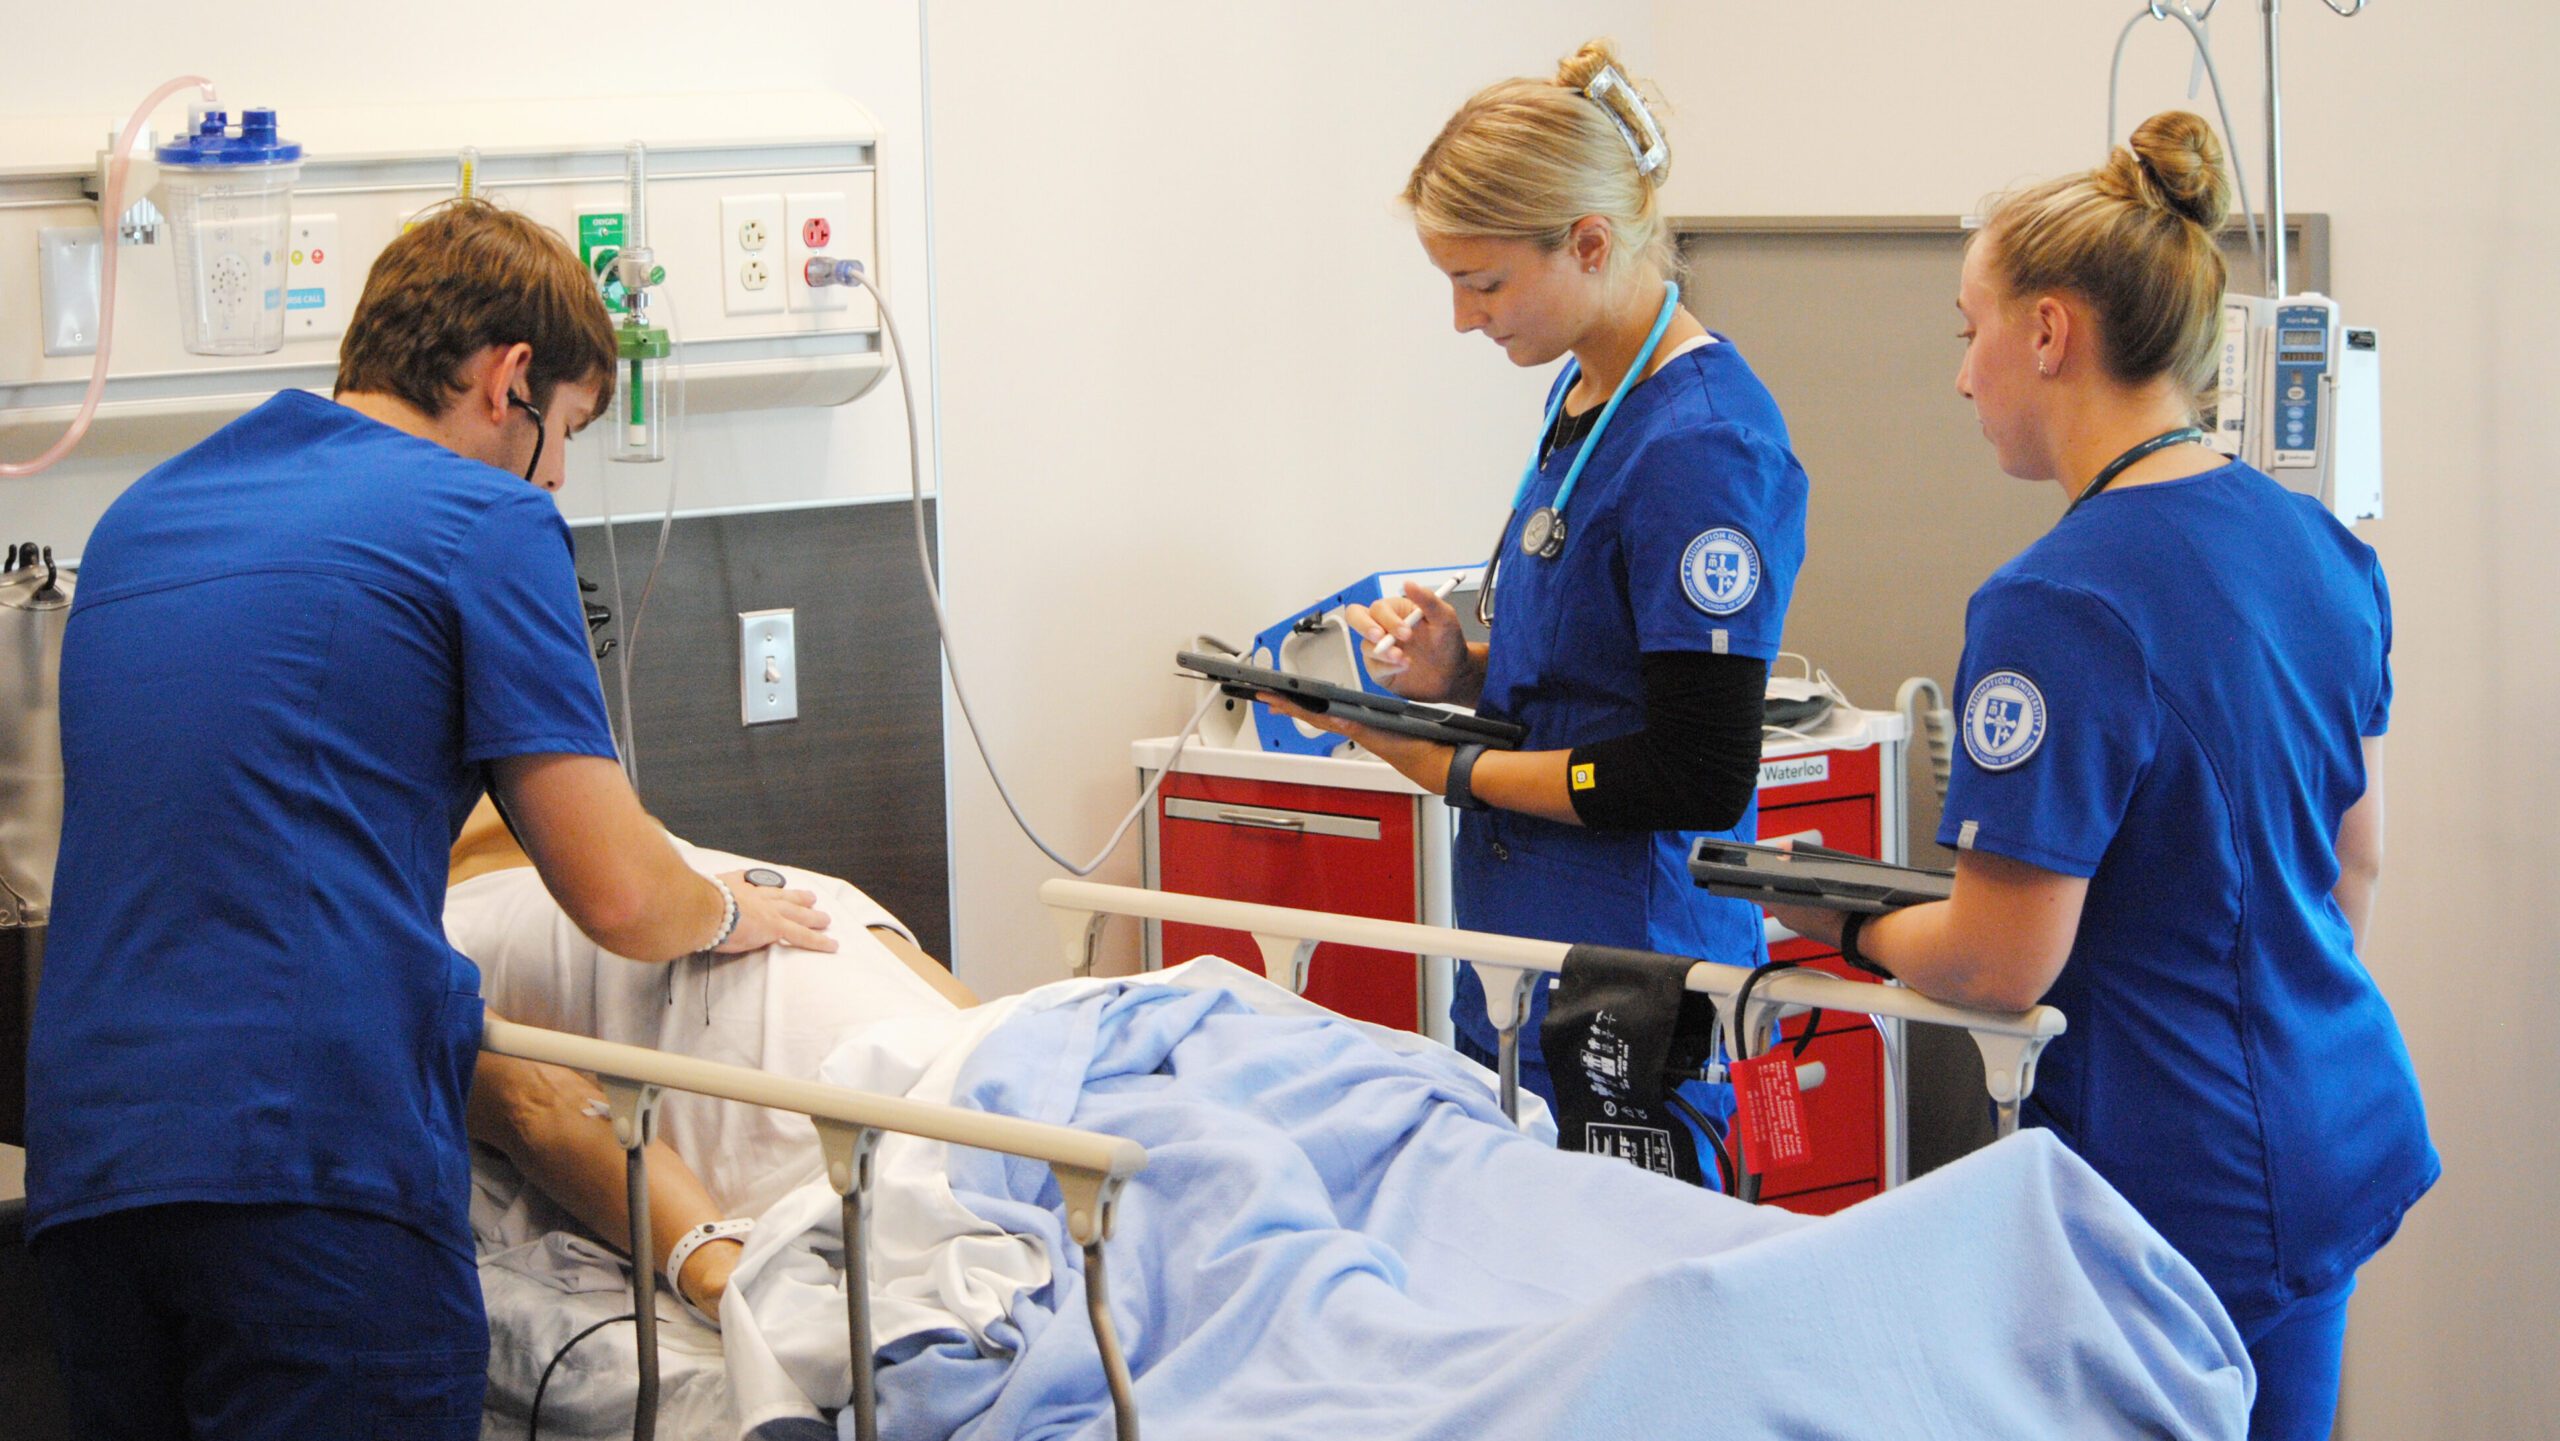 Three nursing students standing around a hospital bed